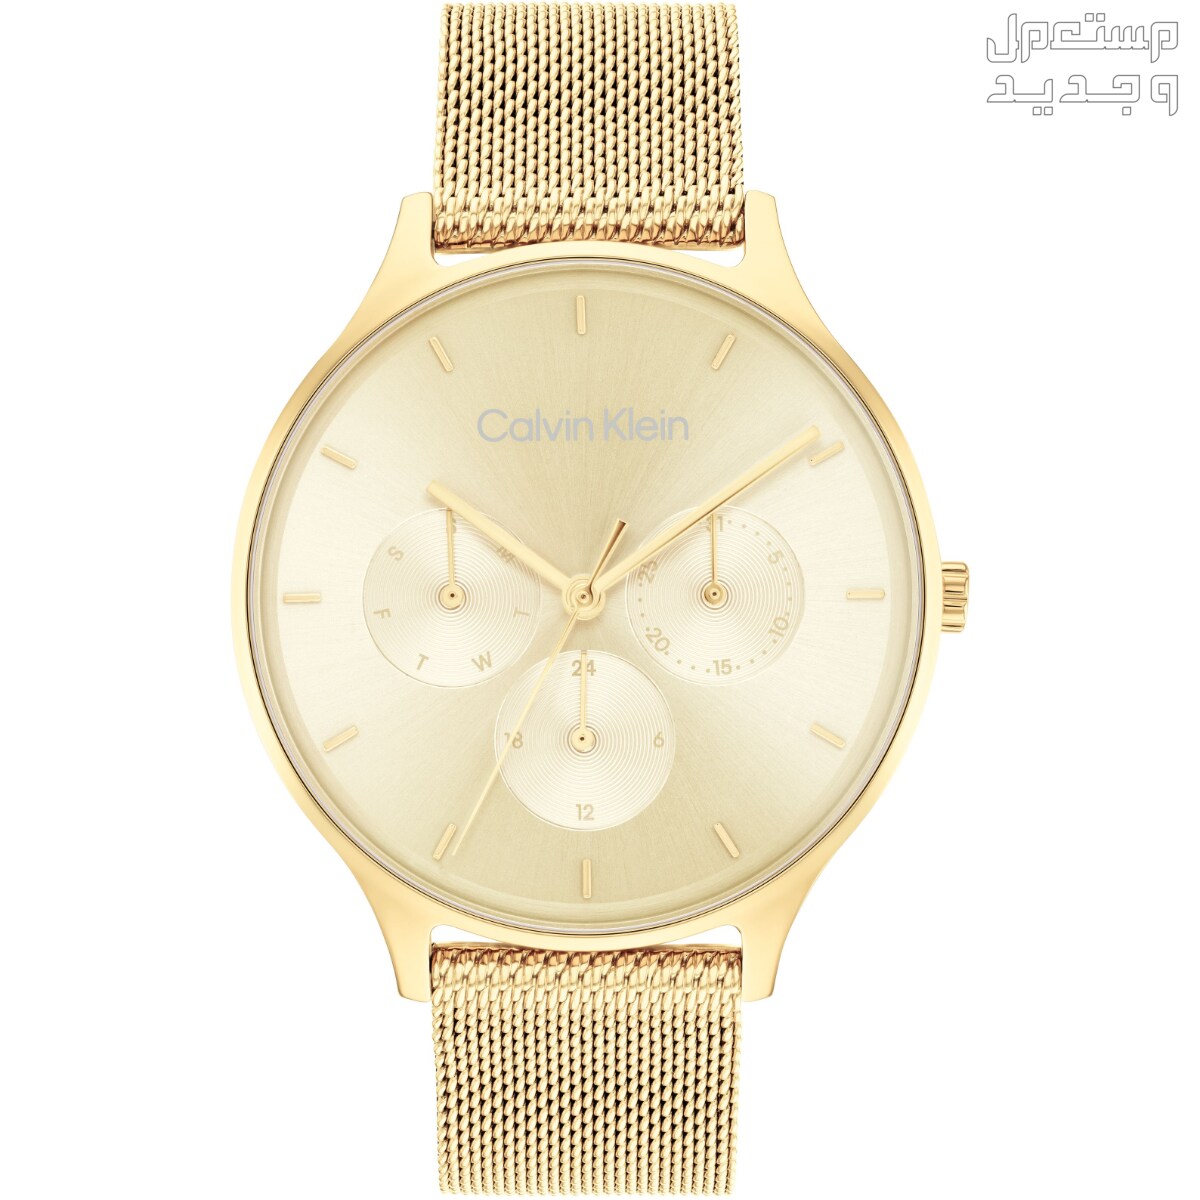 أنواع ساعات يد ذهب نسائية واسعارها في مصر ساعة Calvin Klein Timeless Multifunction Day and Date Gold Steel Watch 25200103